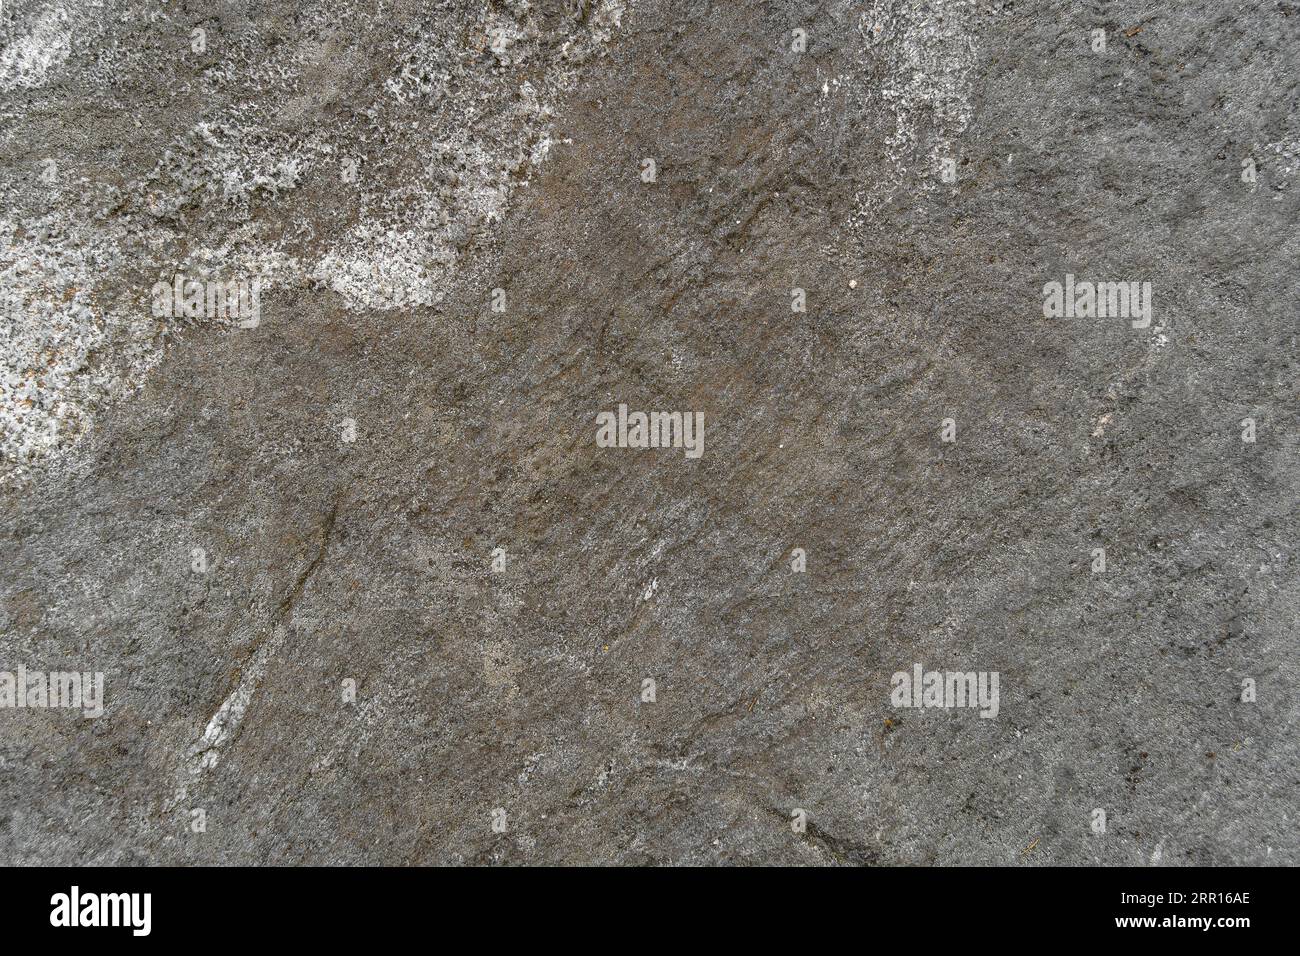 Rock, stone texture close up Stock Photo